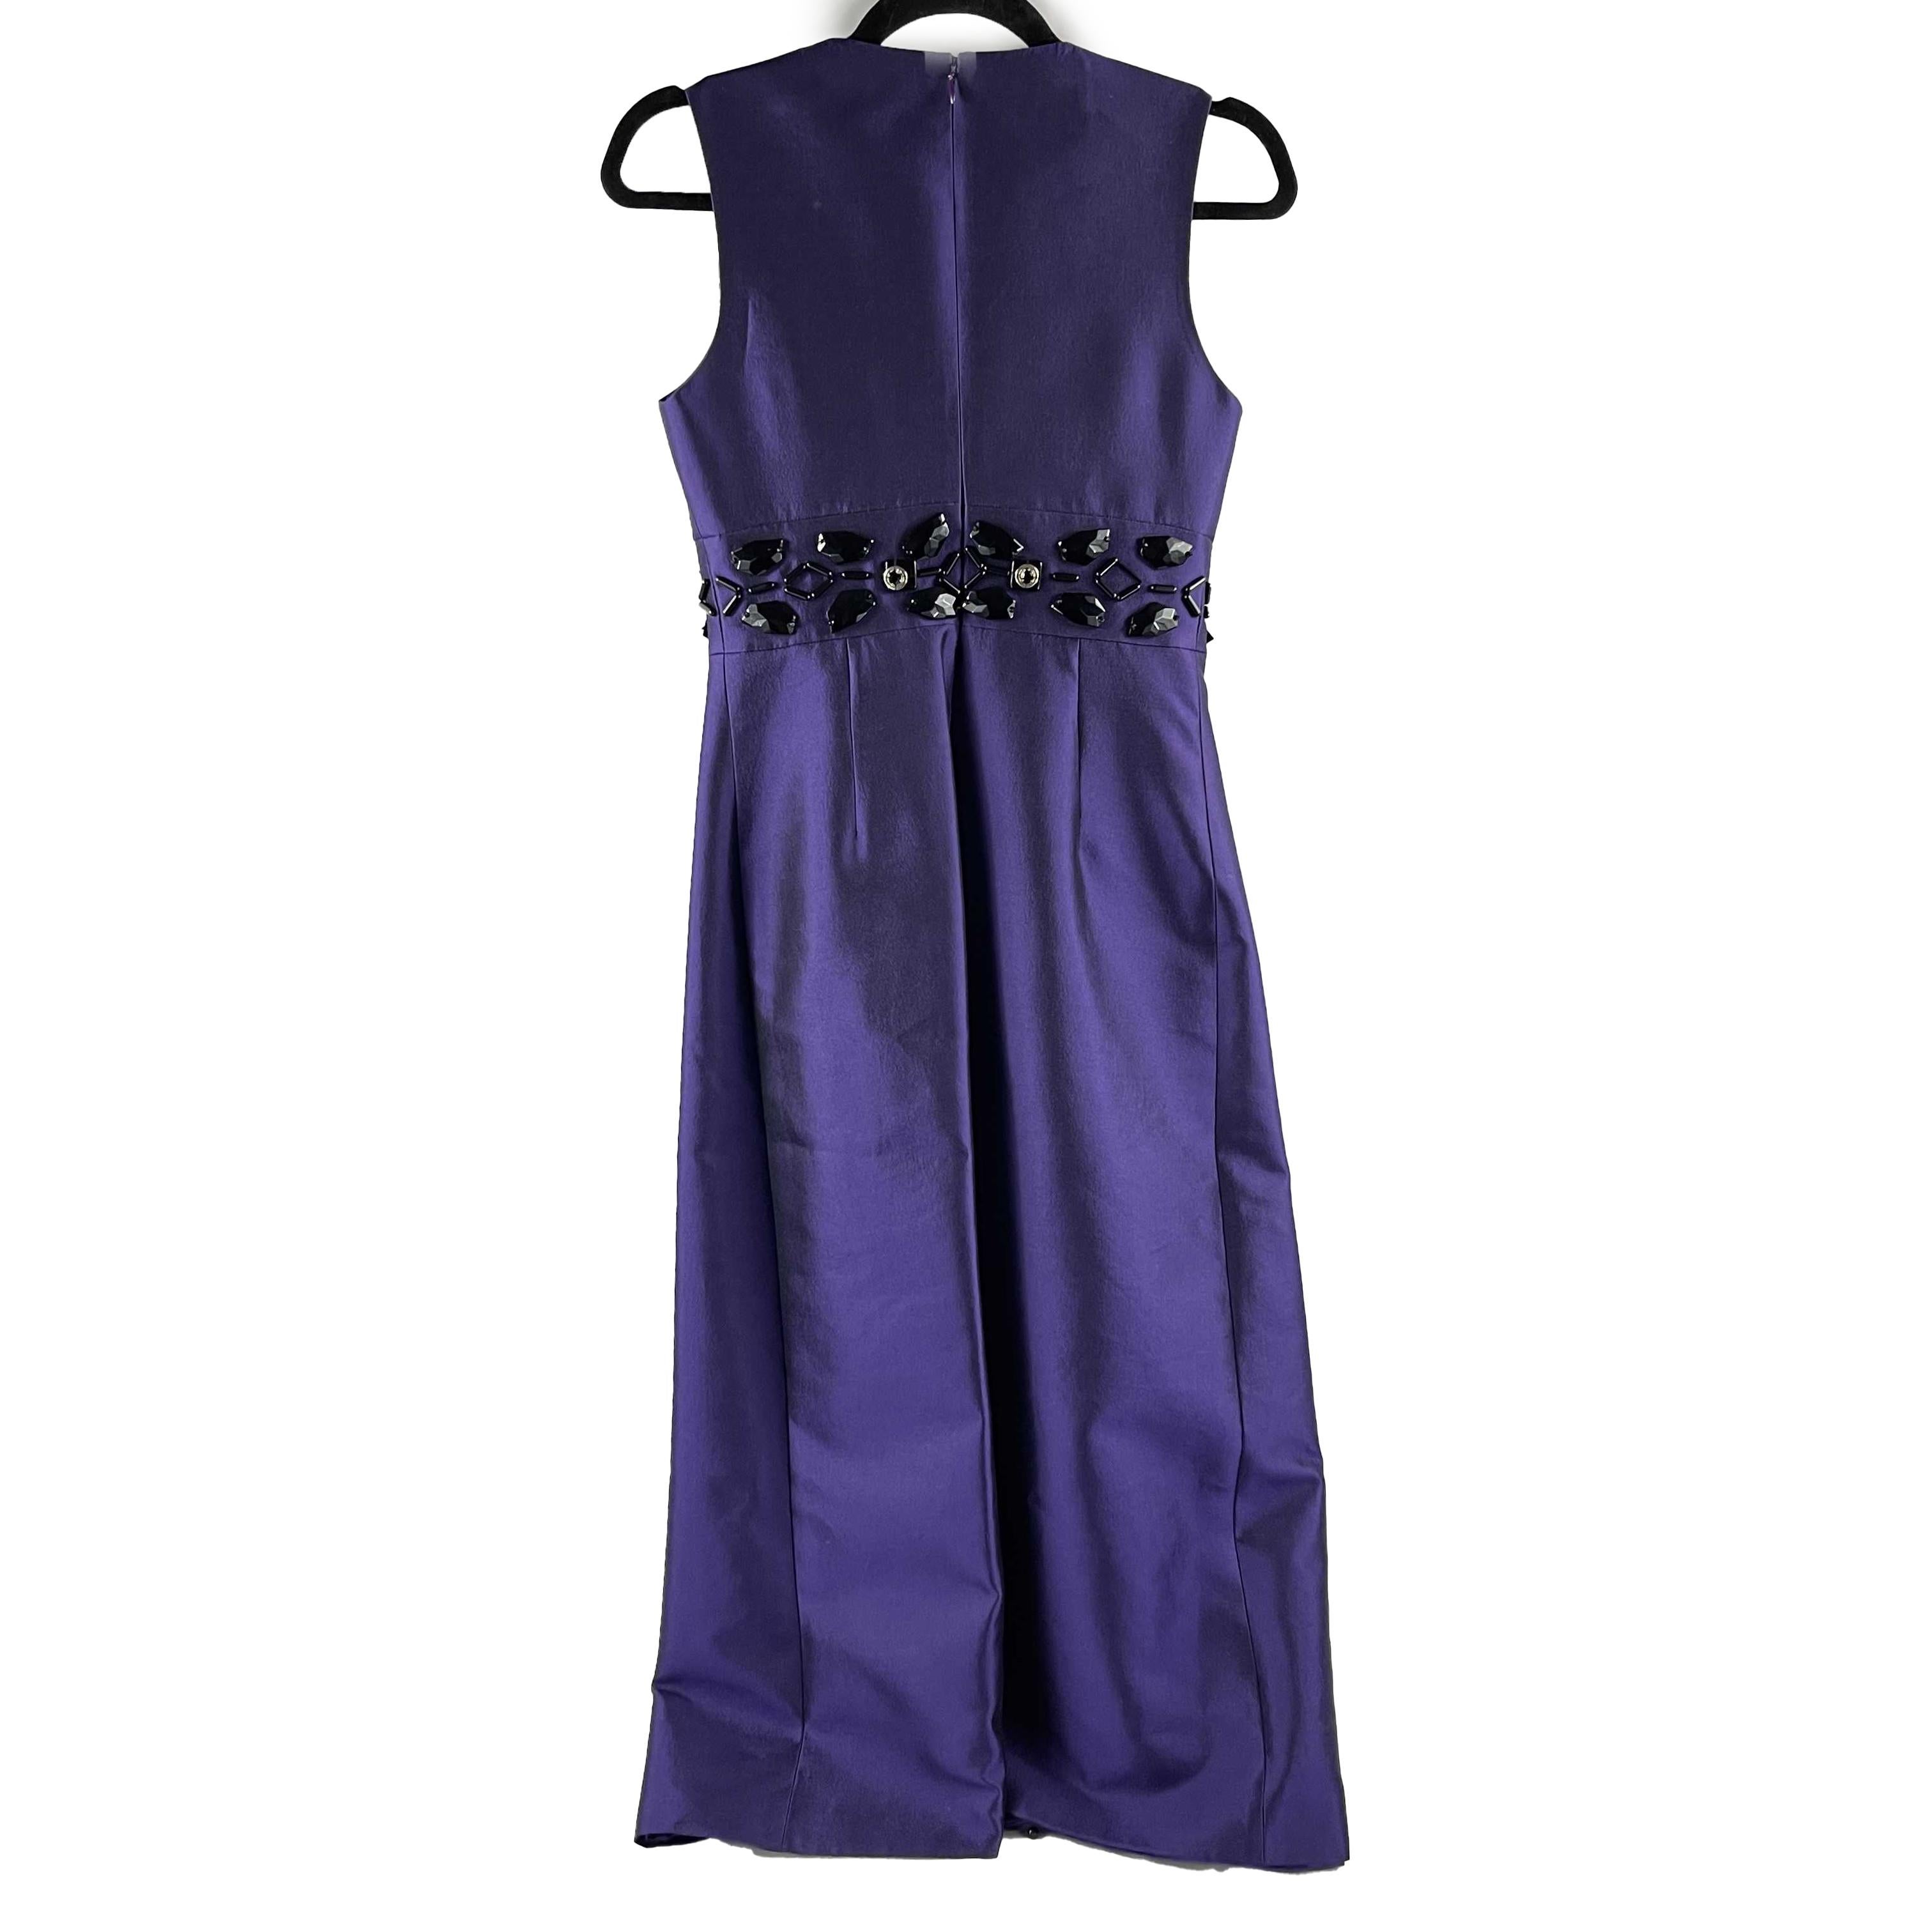 PRADA - Beaded Detail A-Line Purple Satin-like Sleeveless Midi Dress 

Description

This sleeveless Prada dress is designed with a purple satin-like fabric, a-line silhouette, and midi length.
It features beautiful beaded details around the waist